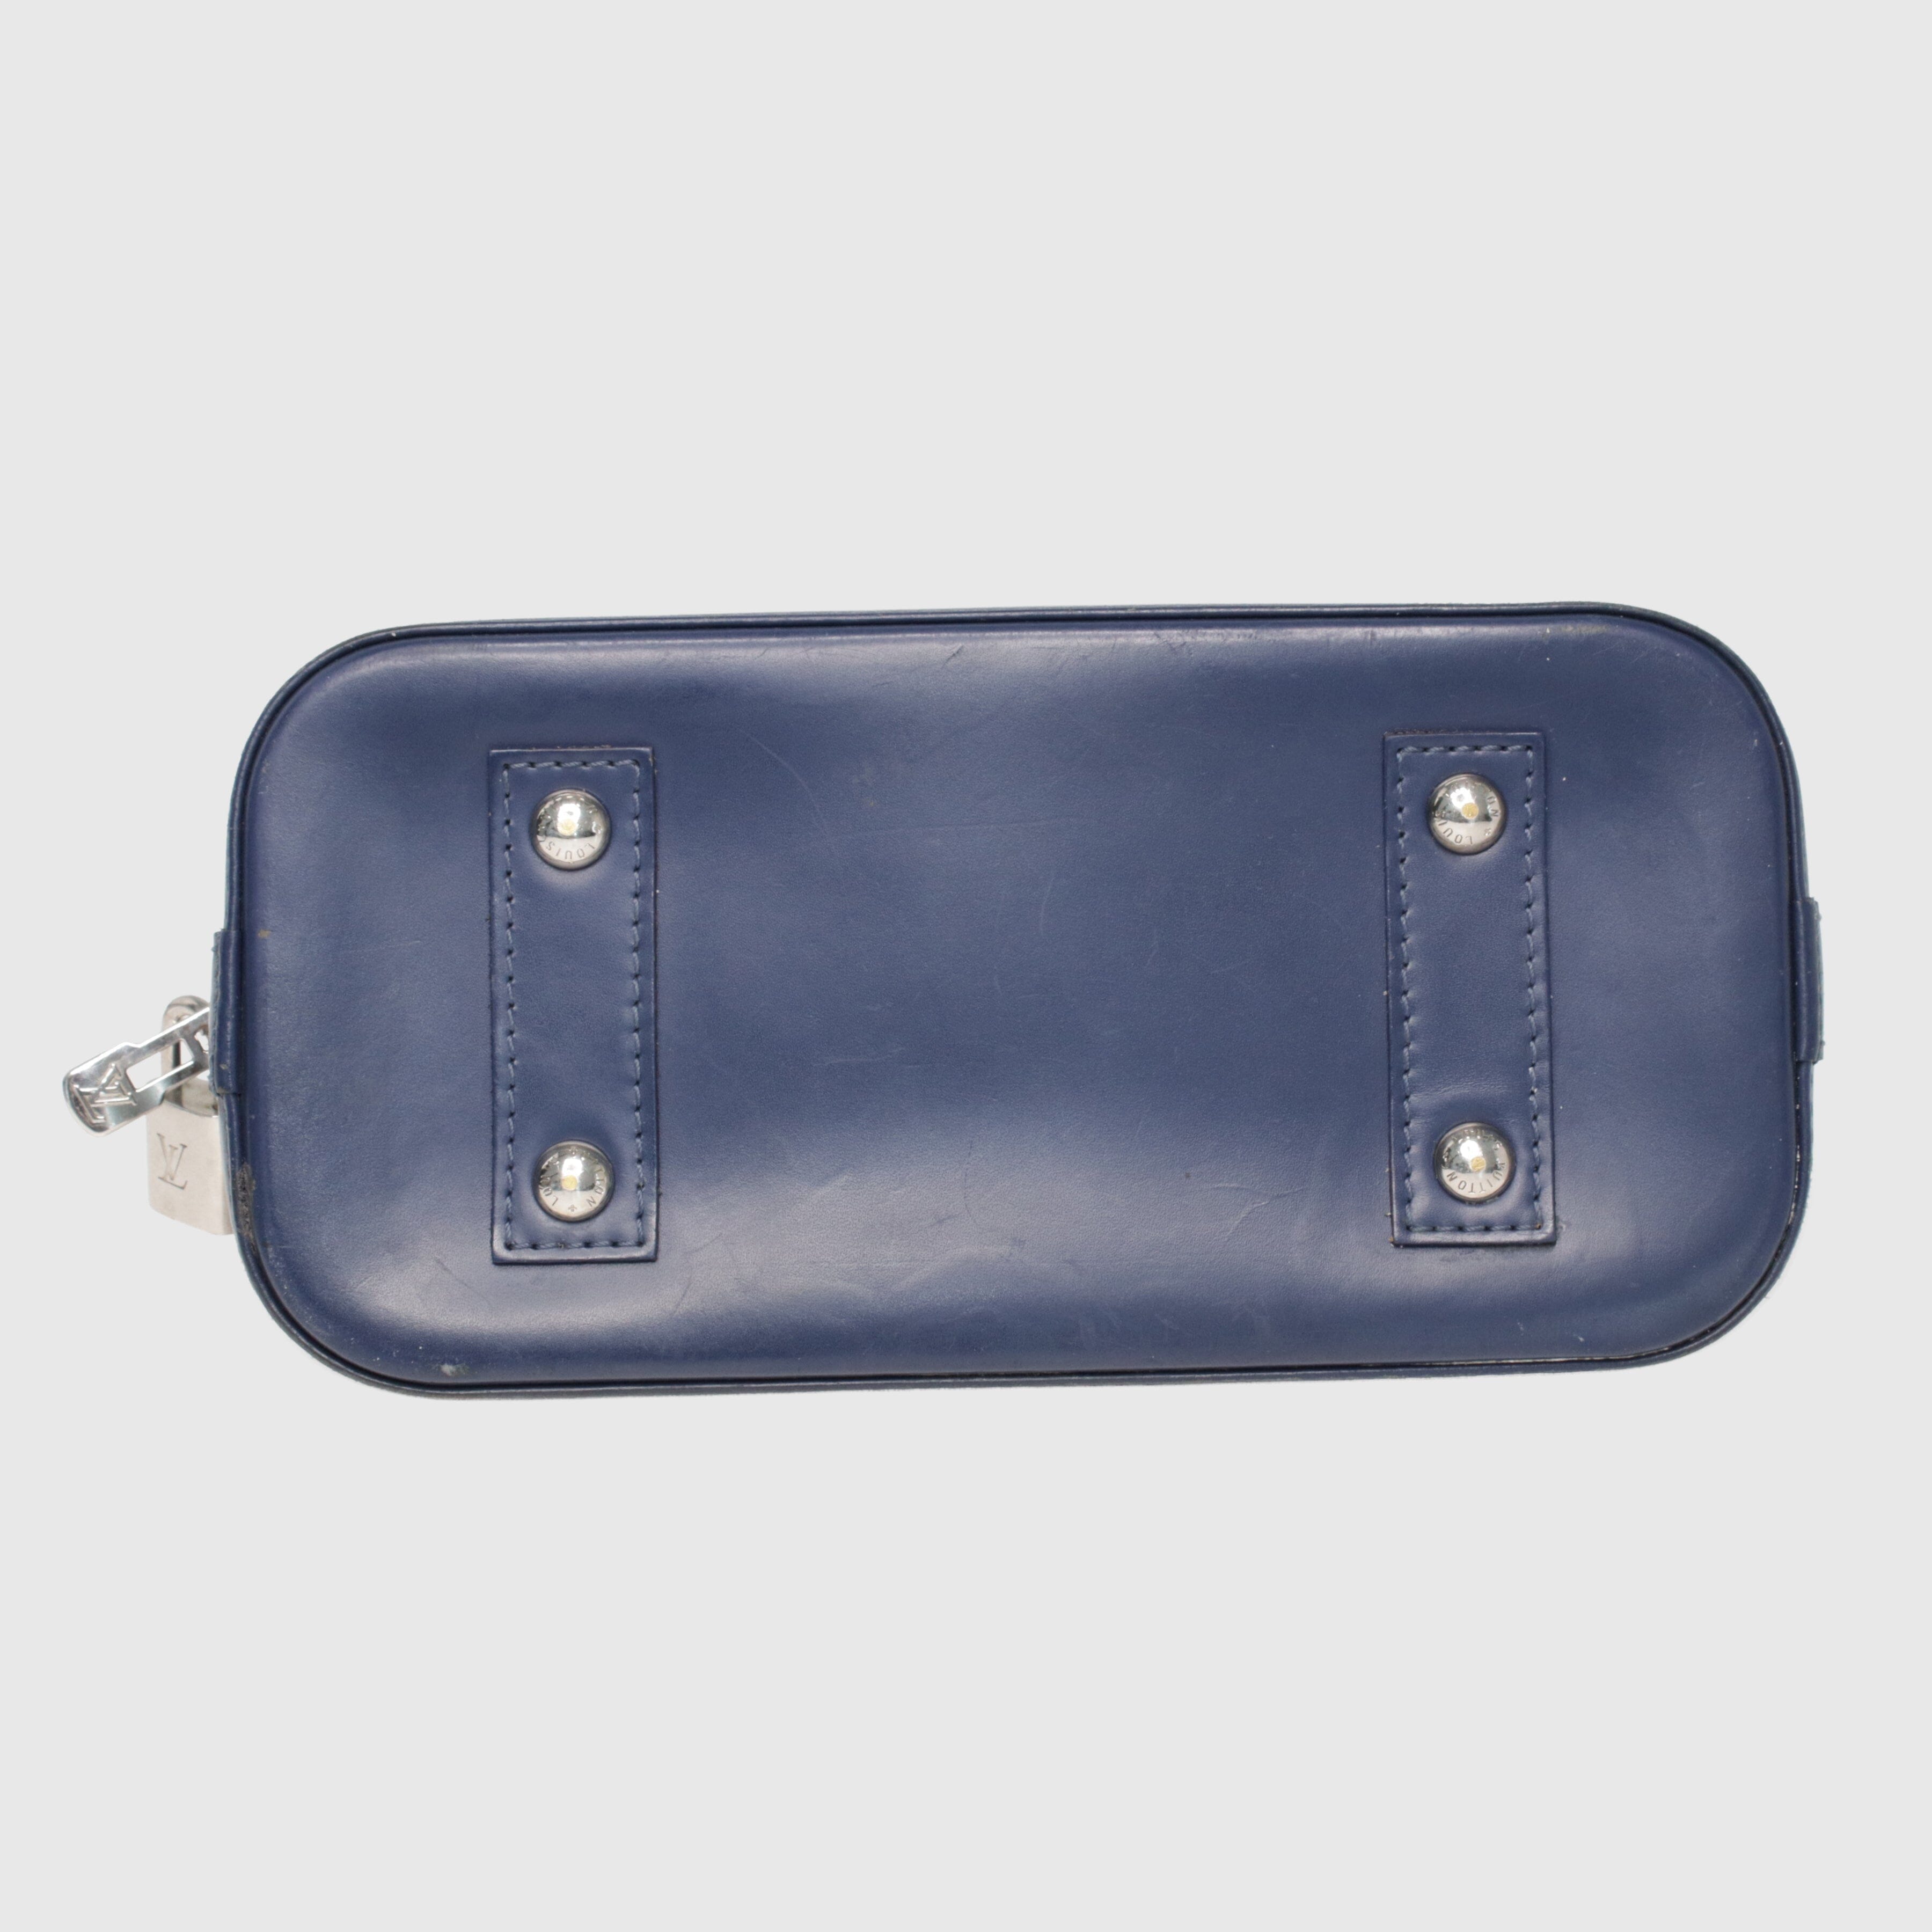 Navy Blue Epi Alma BB Top Handle Bag